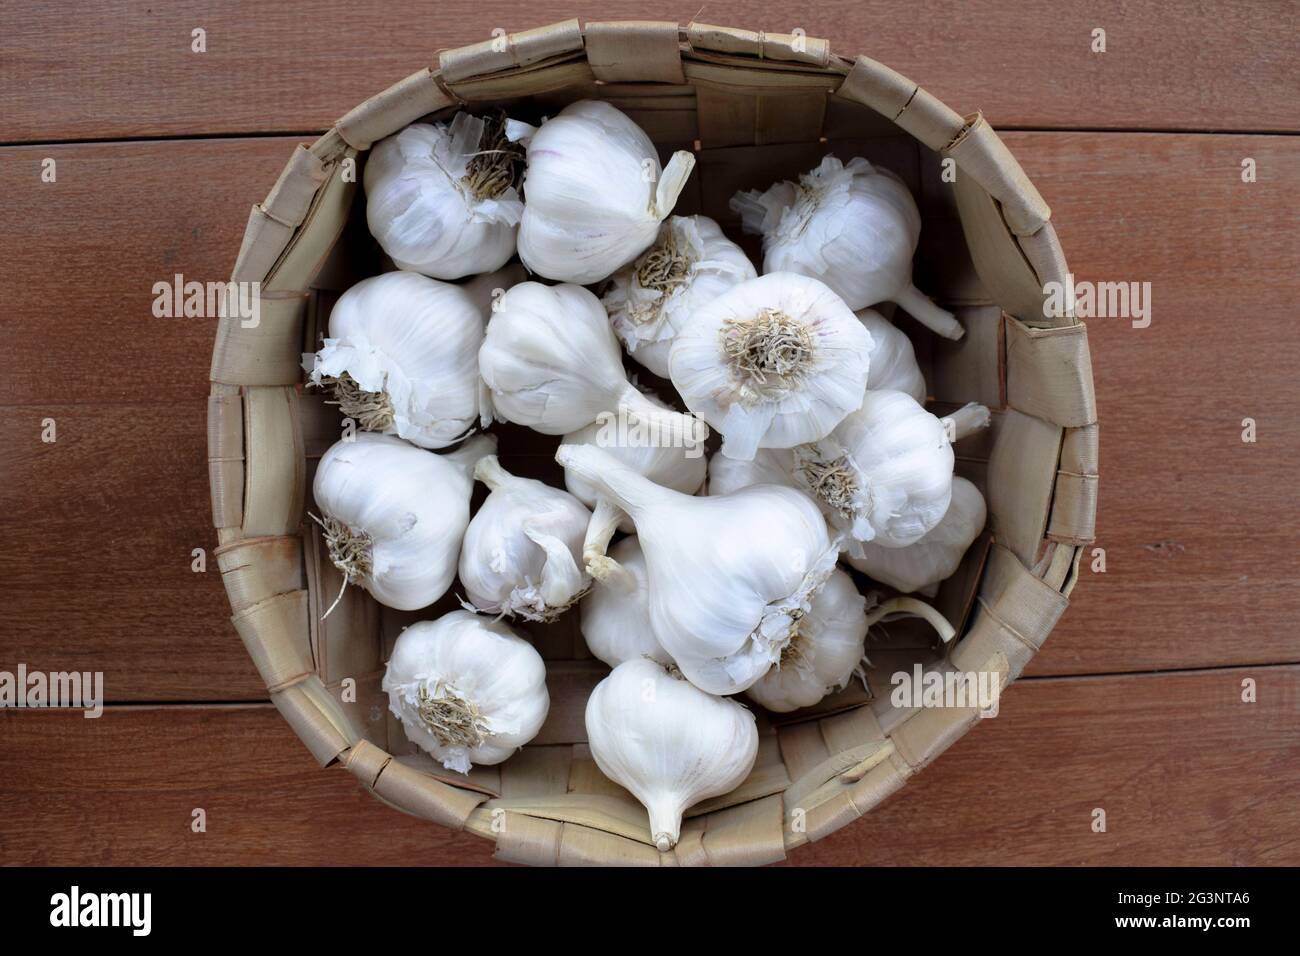 Fresh organic whole Garlic bulbs in wicker basket on wooden background. Stock Photo